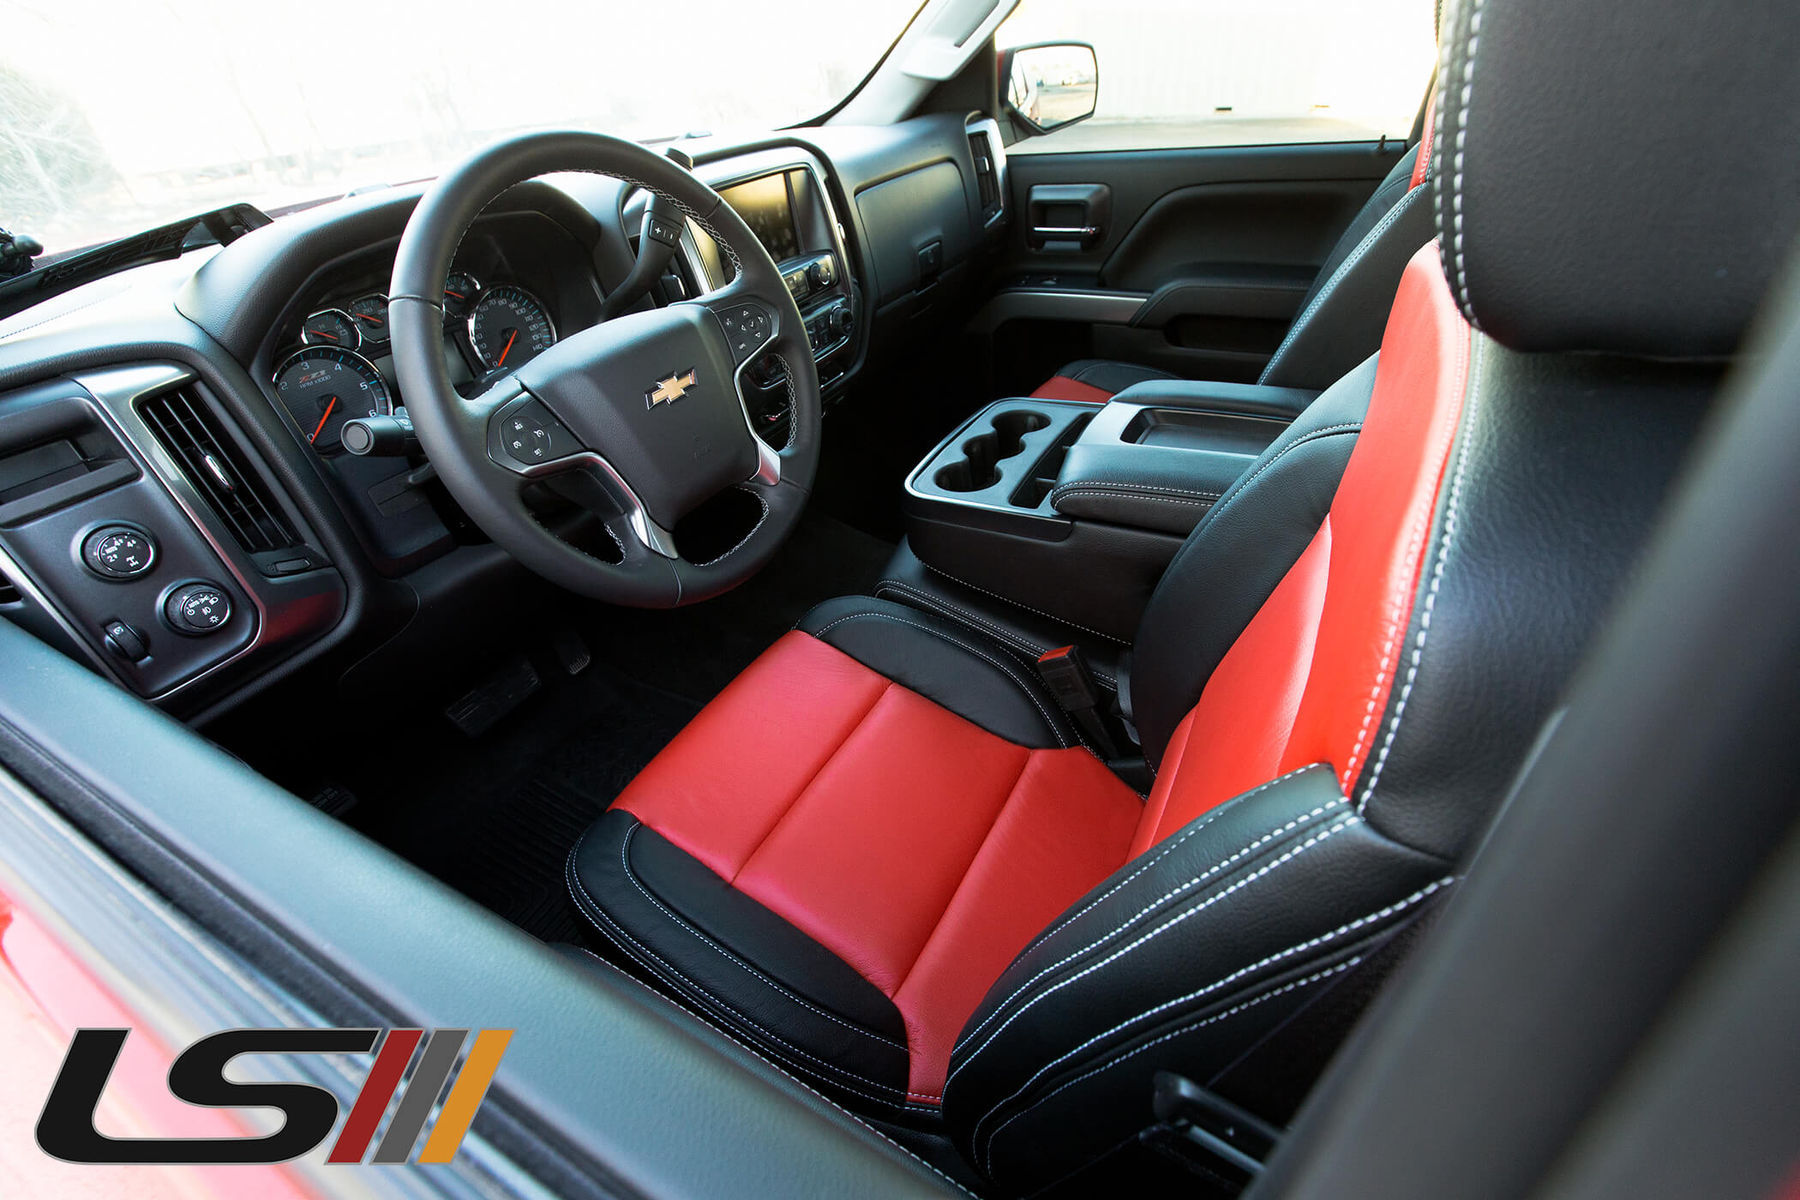 2016 Chevrolet Silverado Ltz Interior - Chevrolet Cars